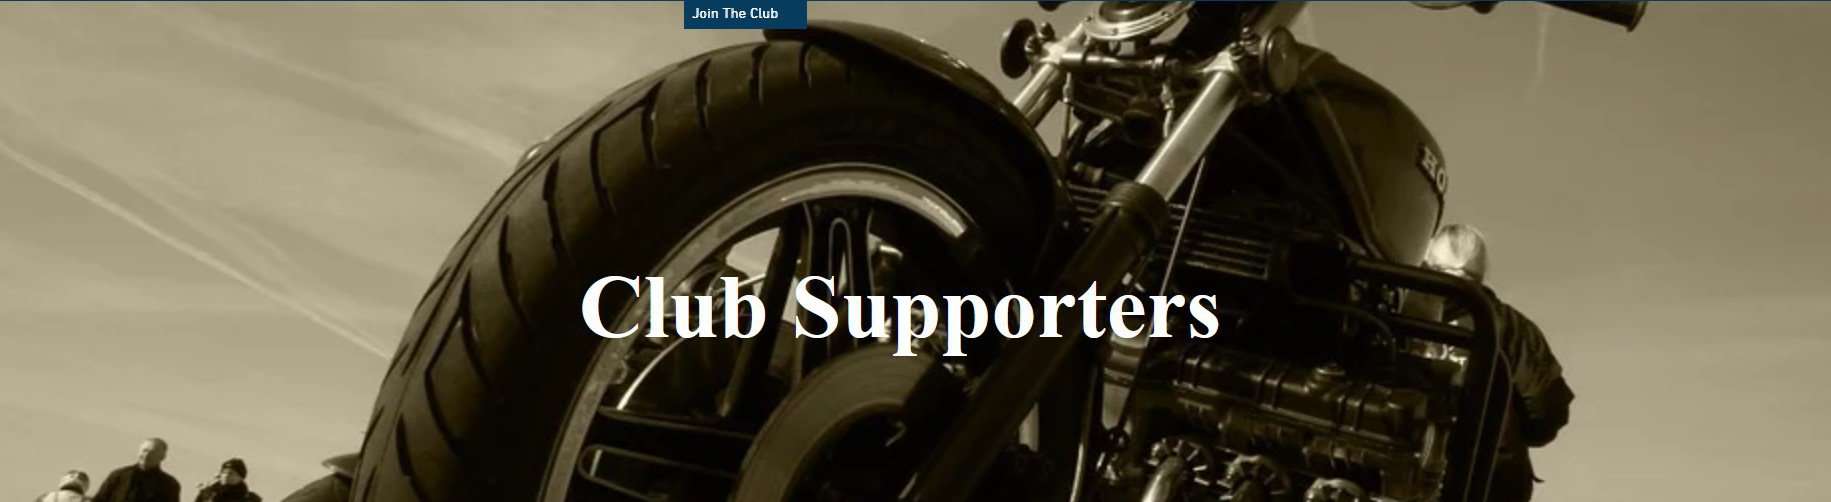 Downs Motorcycle Club logo1 e1679968367766